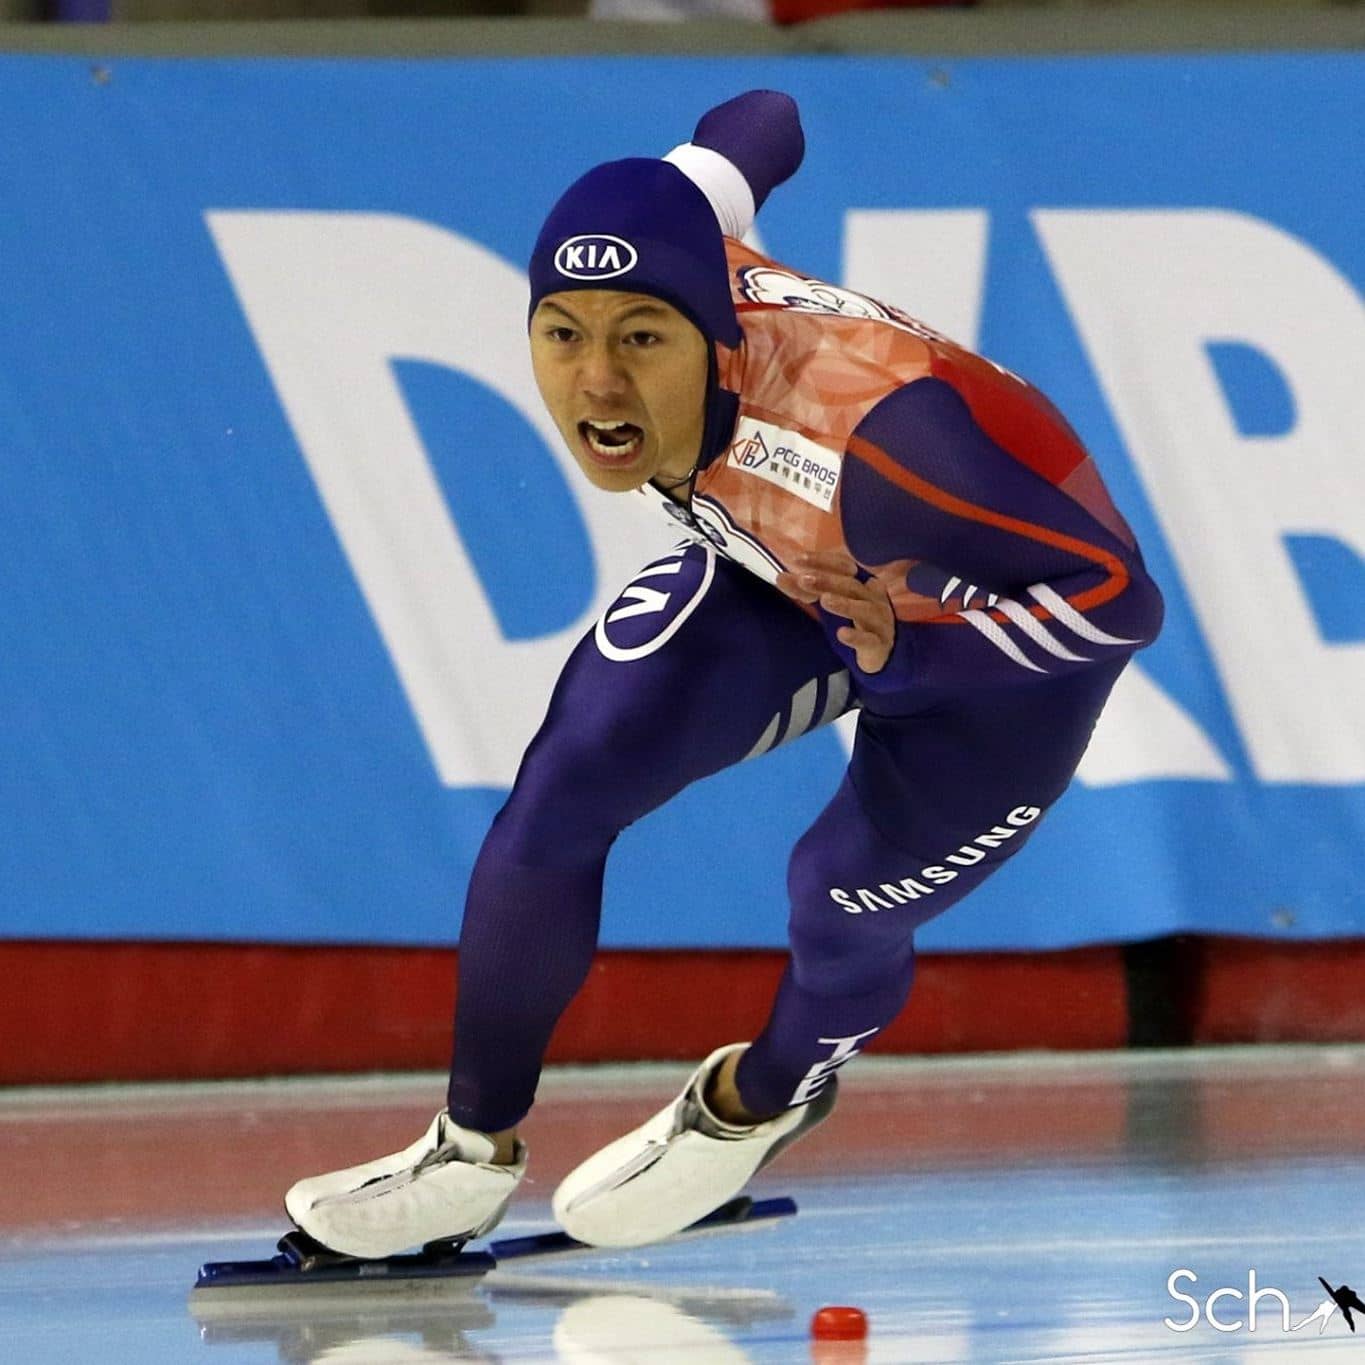 Darren曾是台灣冰刀奧運培訓隊國手